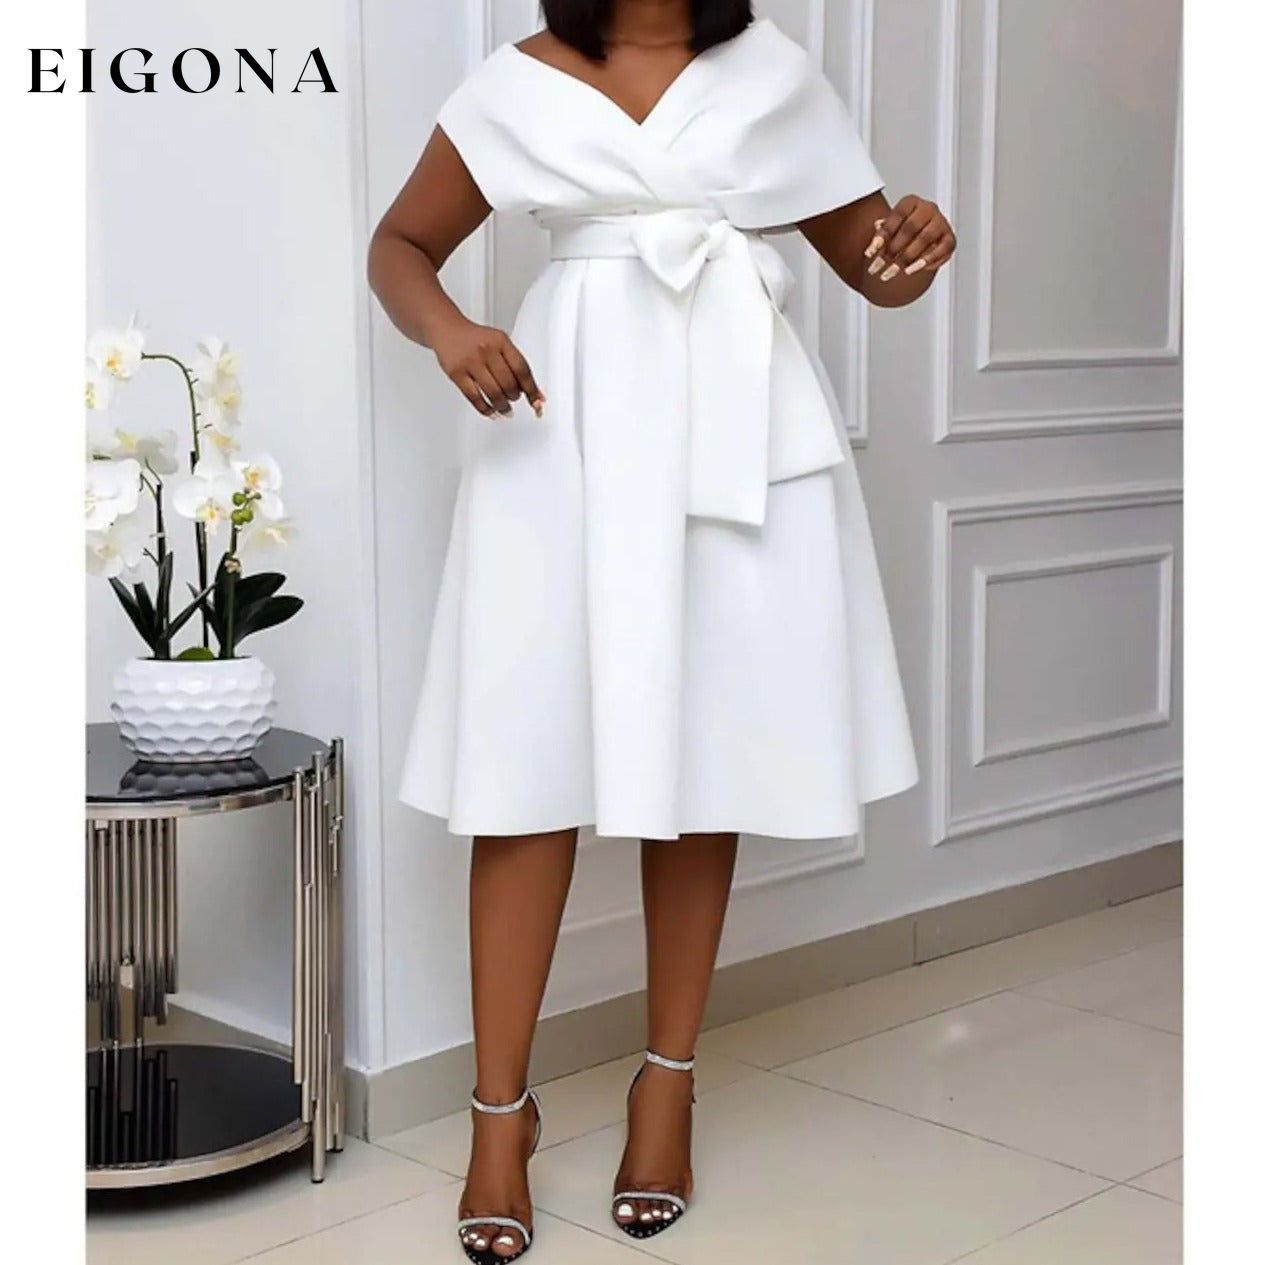 Women's V-Neck Elegant A-Line Dress White __stock:200 casual dresses clothes dresses refund_fee:1200 show-color-swatches